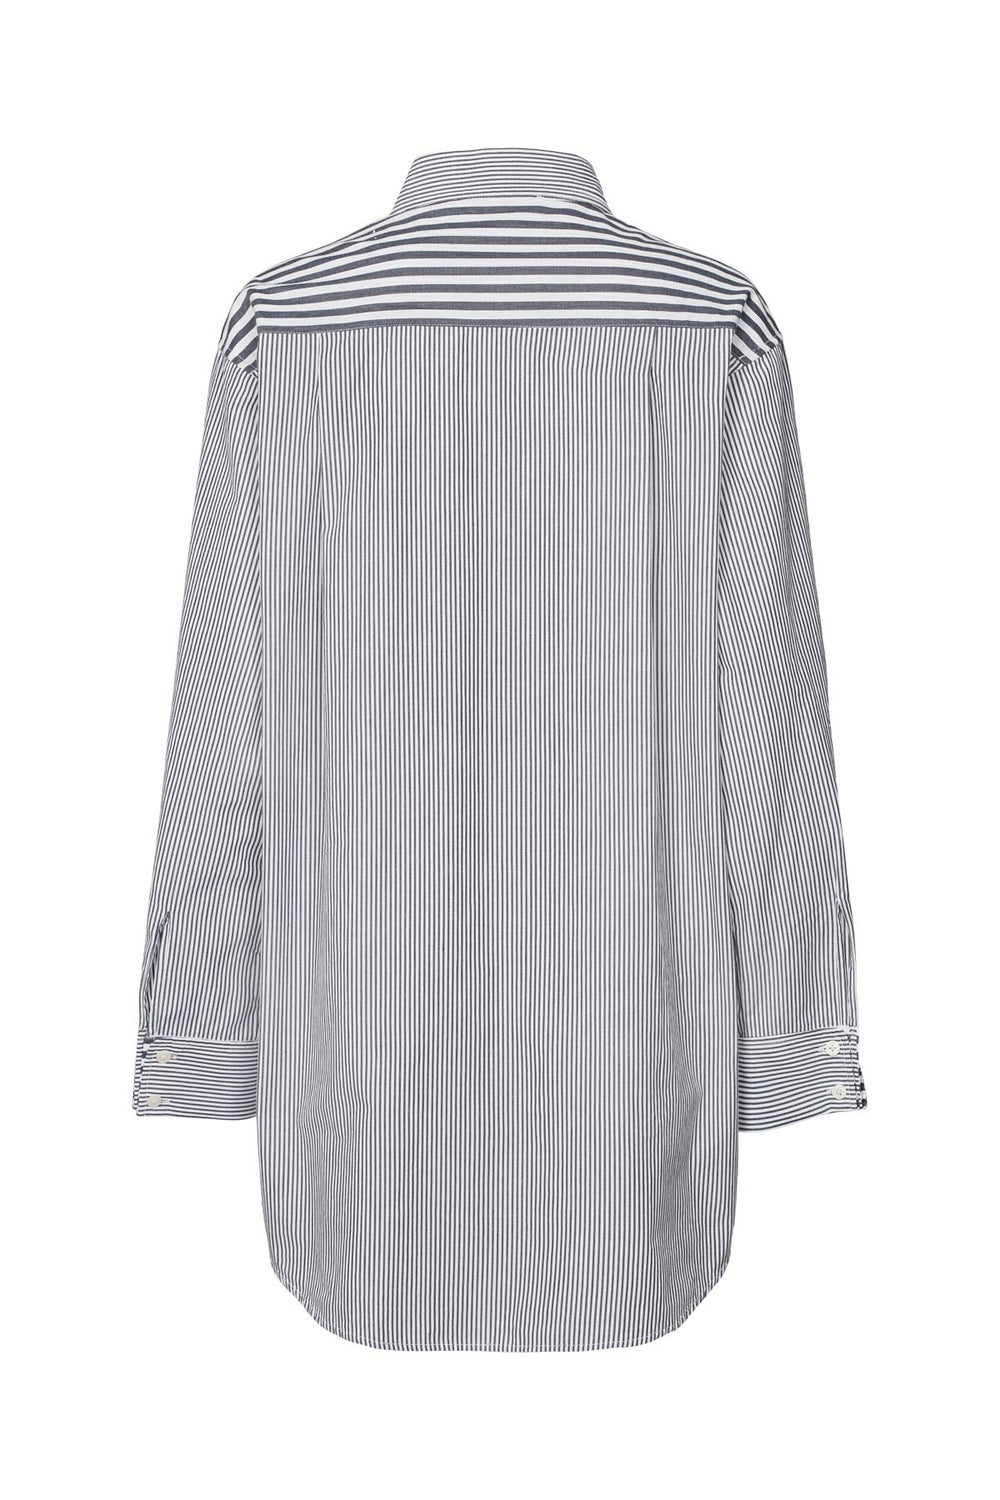 Skjorte | Rabens Saloner Willa Double Stripe Collared Shirt, midnight combi